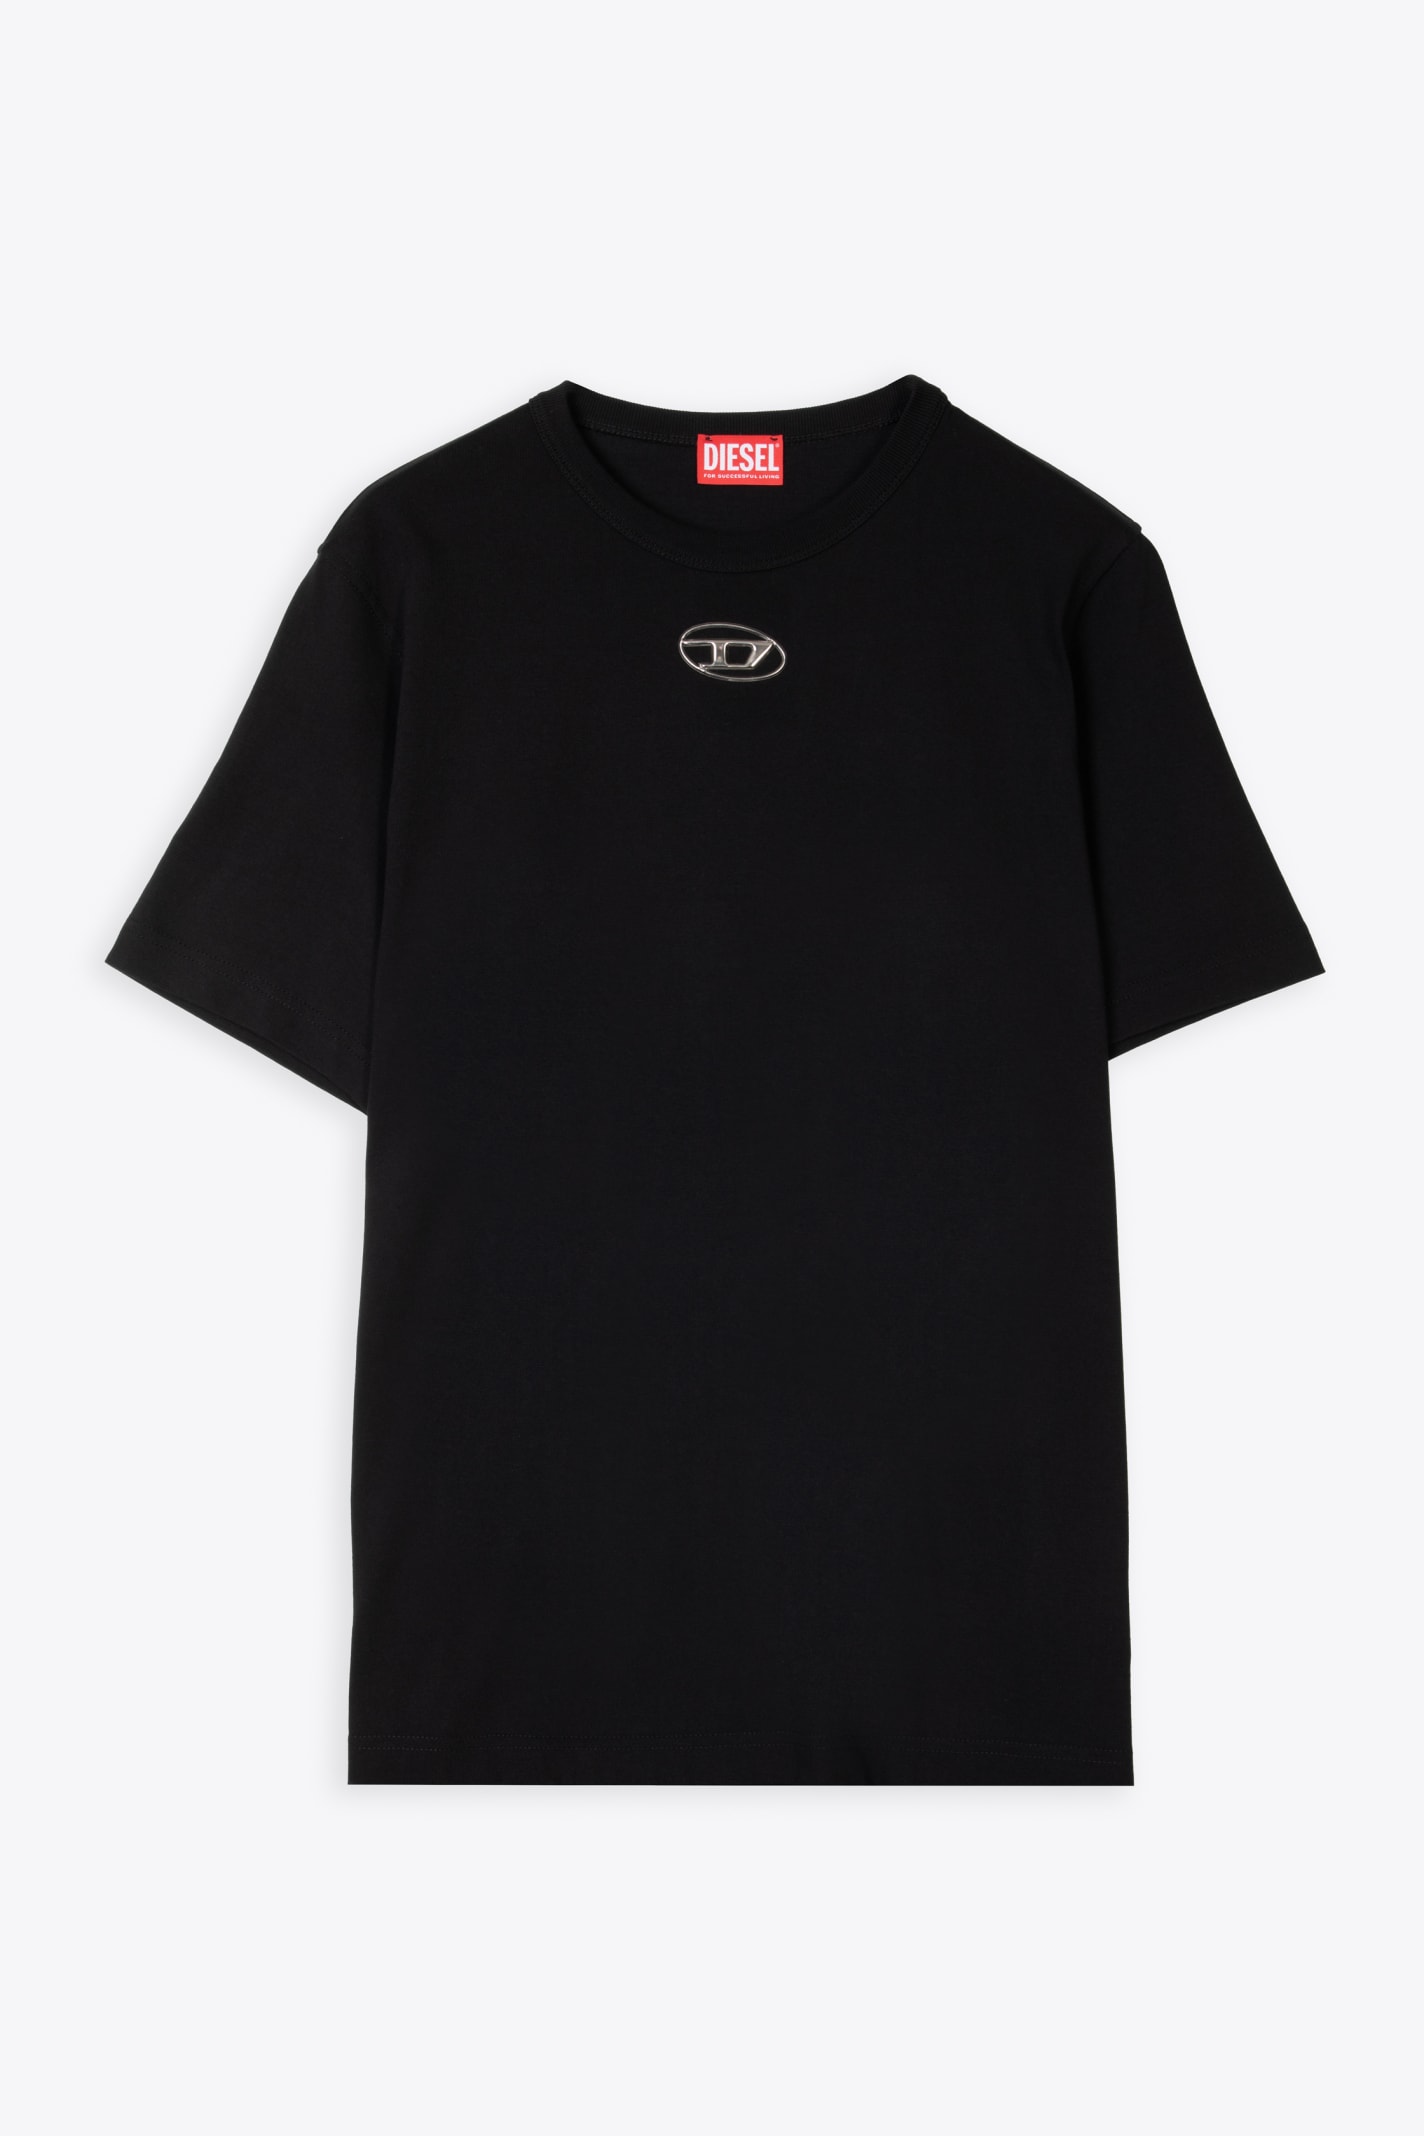 Diesel T-just-od Maglietta Black cotton t-shirt with Oval-D rubber logo - T Just Od